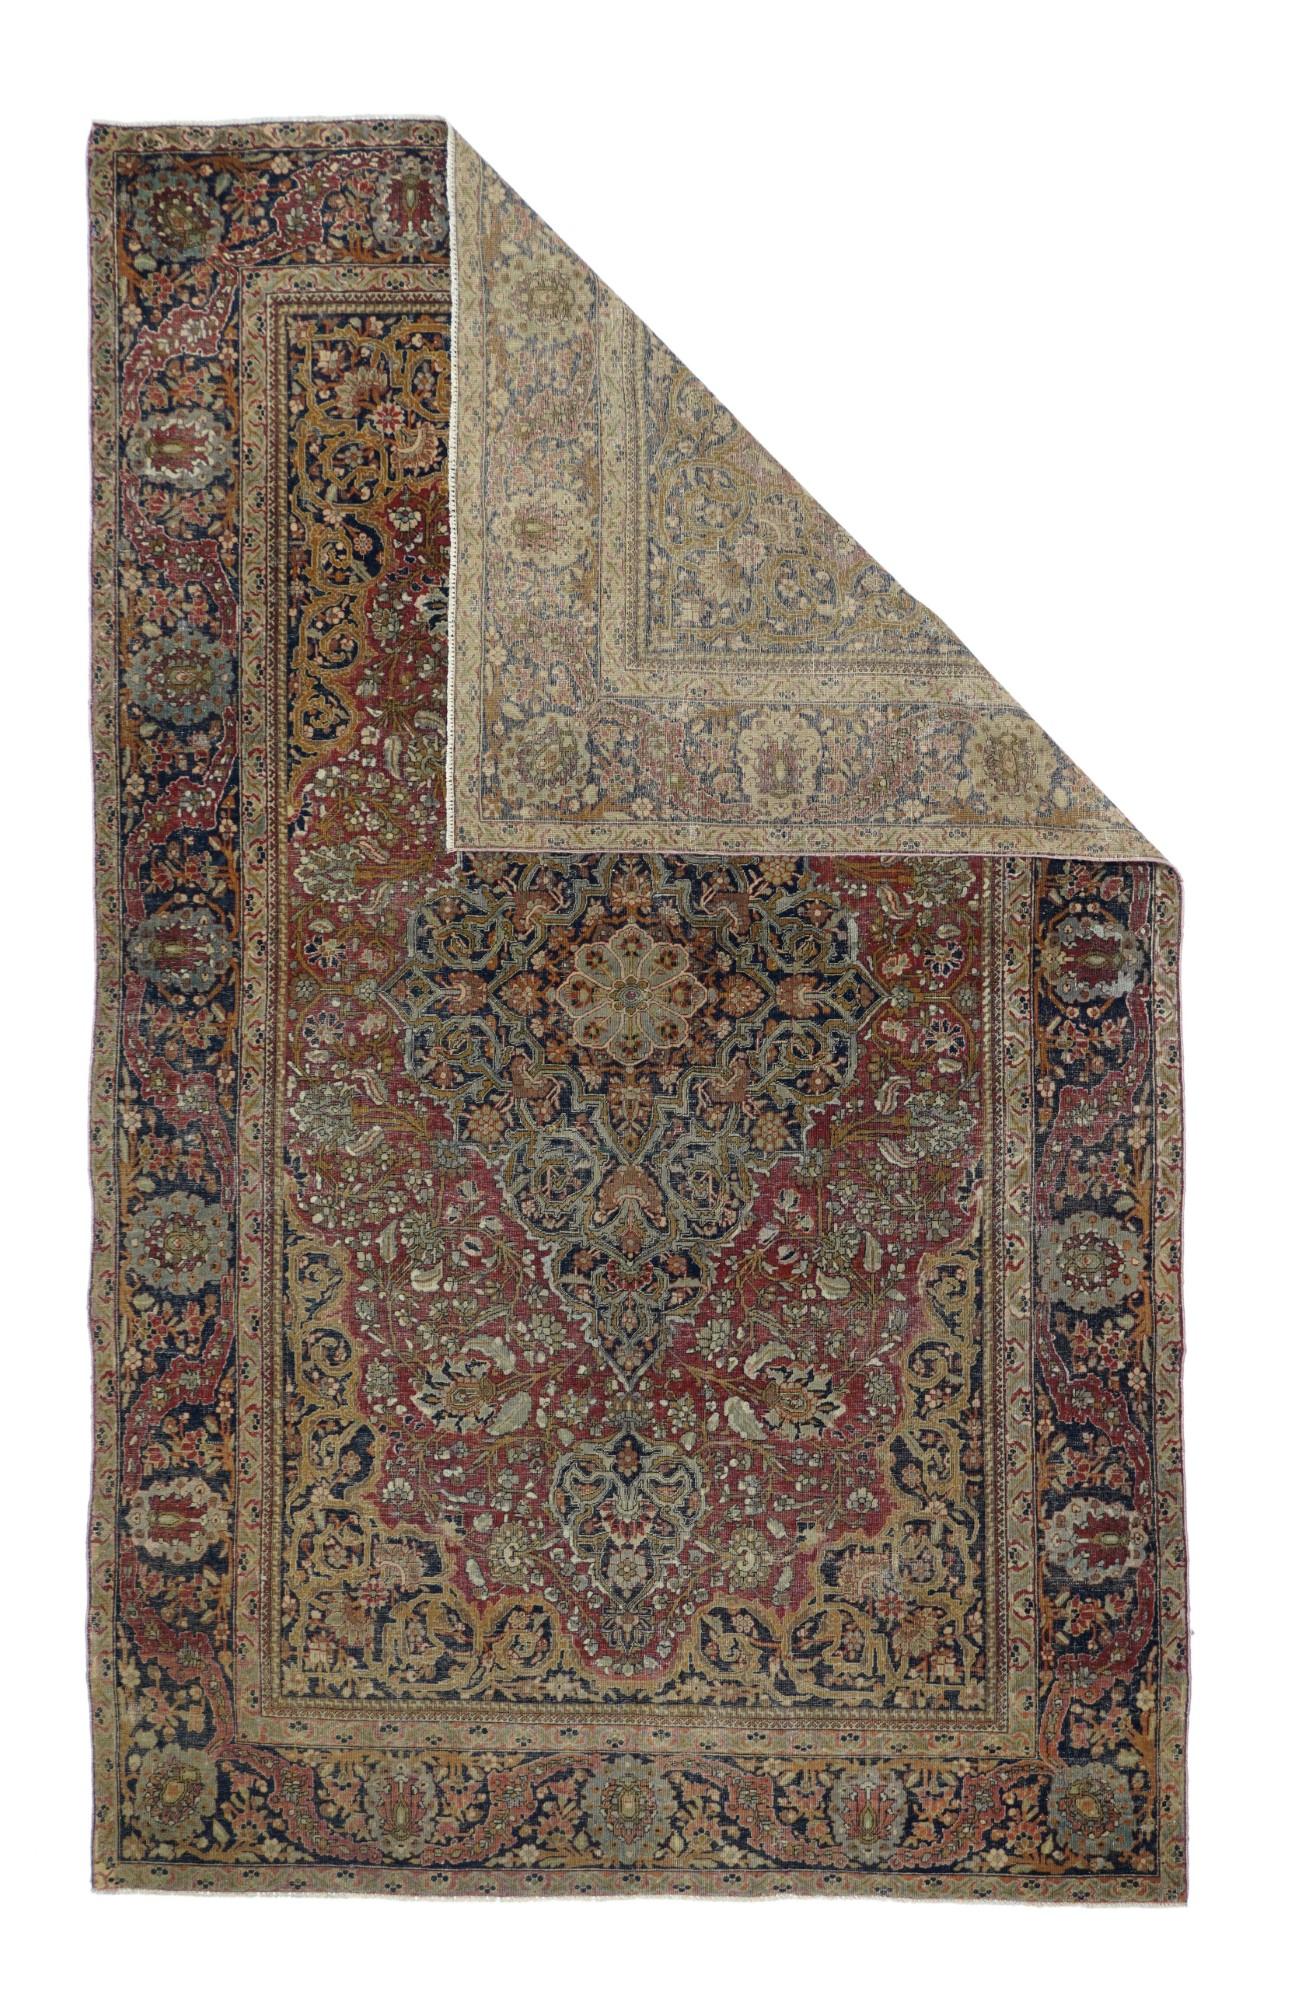 Antique Mohtasham Kashan rug measures 4'2'' x 6'9''.